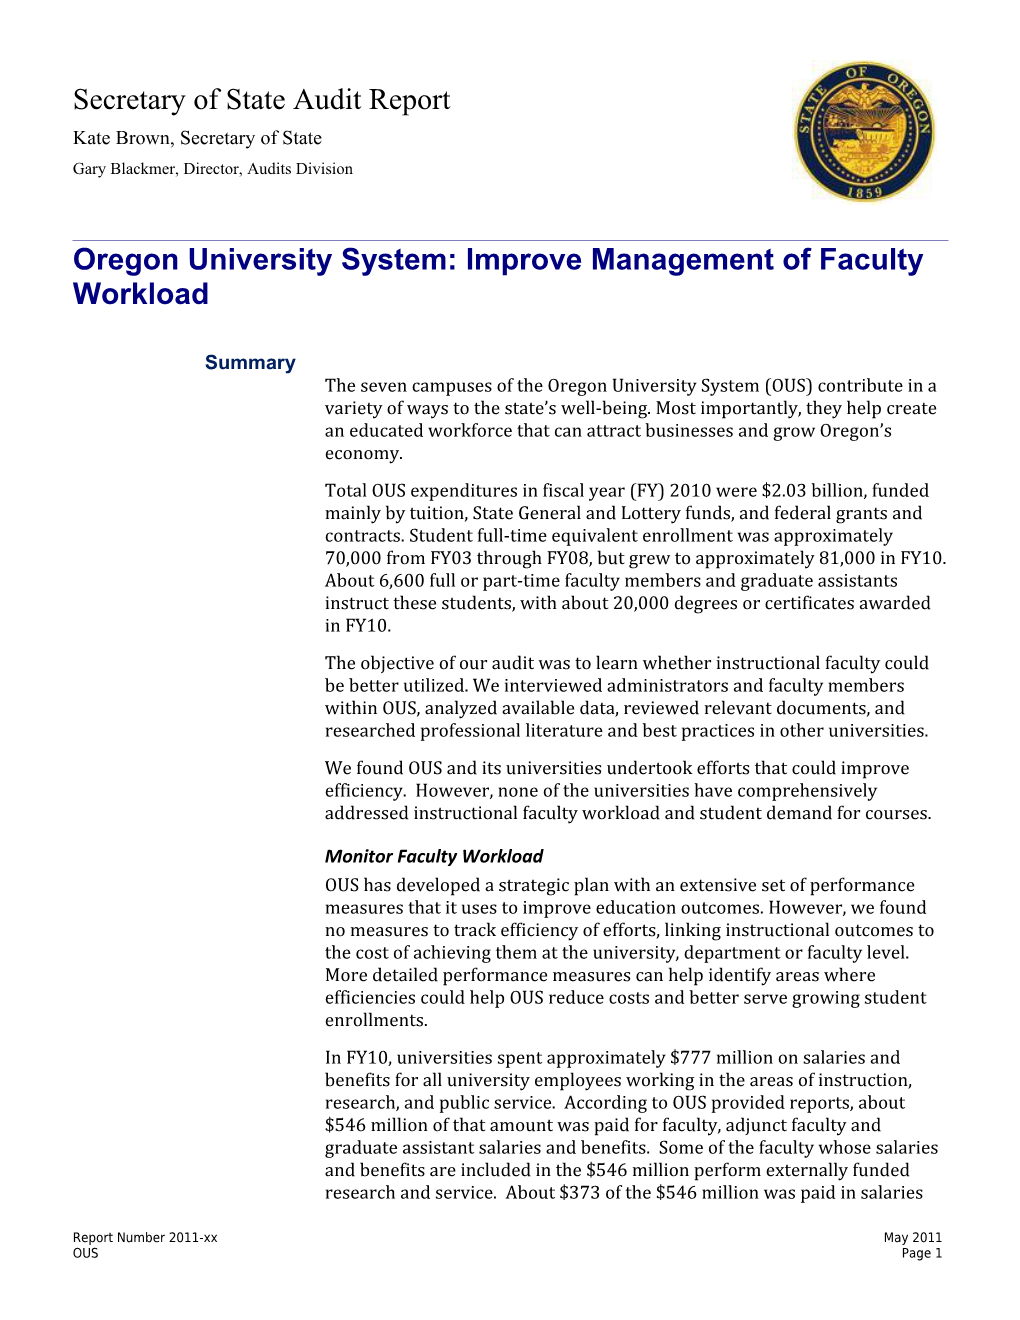 Oregon University System: Improve Management of Faculty Workload